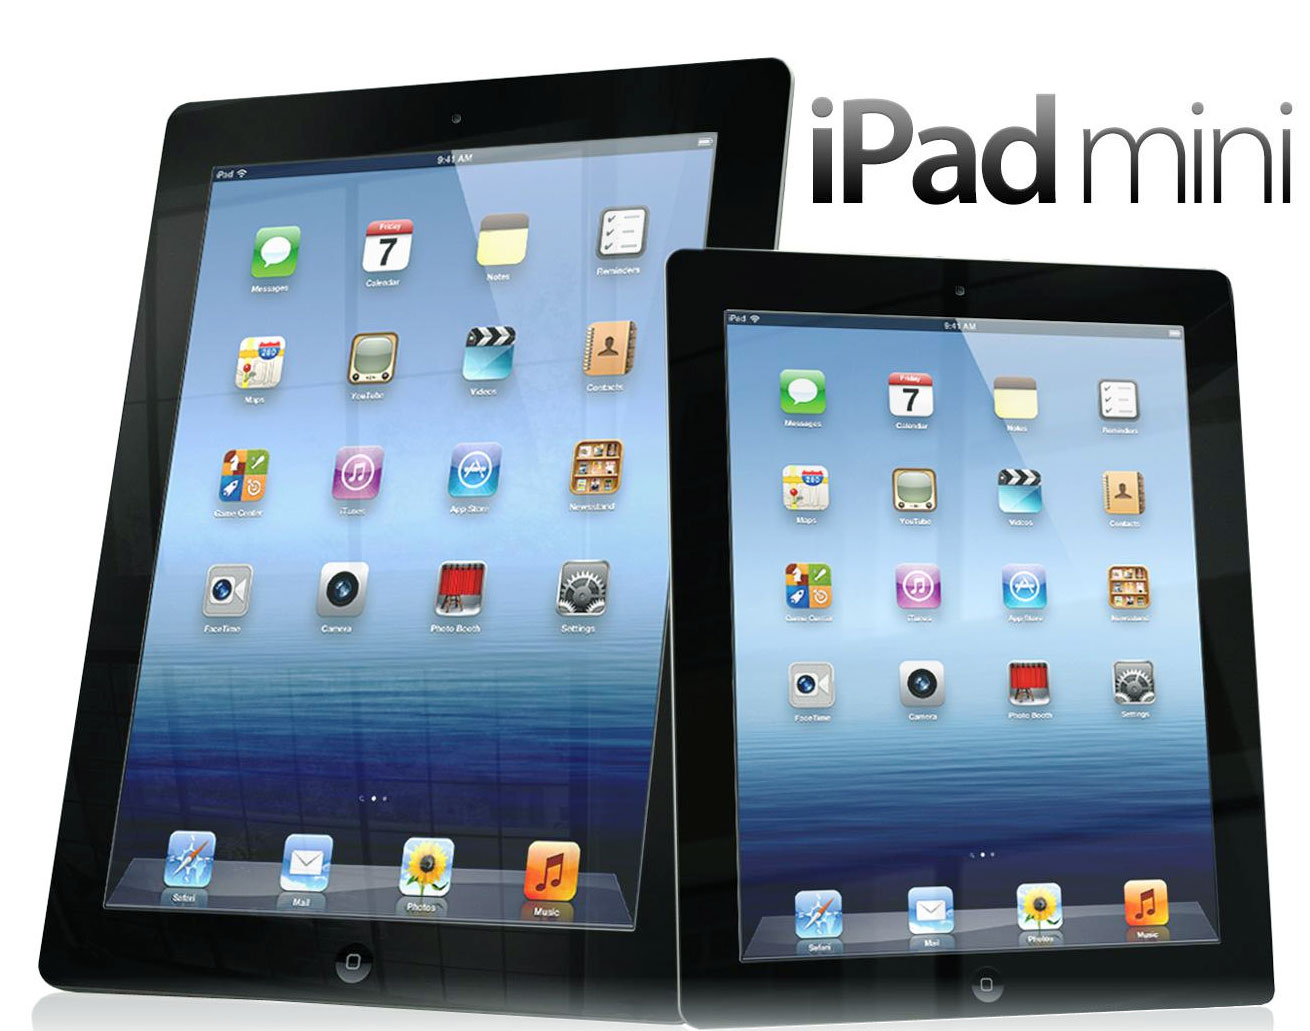 Apple iPad Mini Features | SAGMart